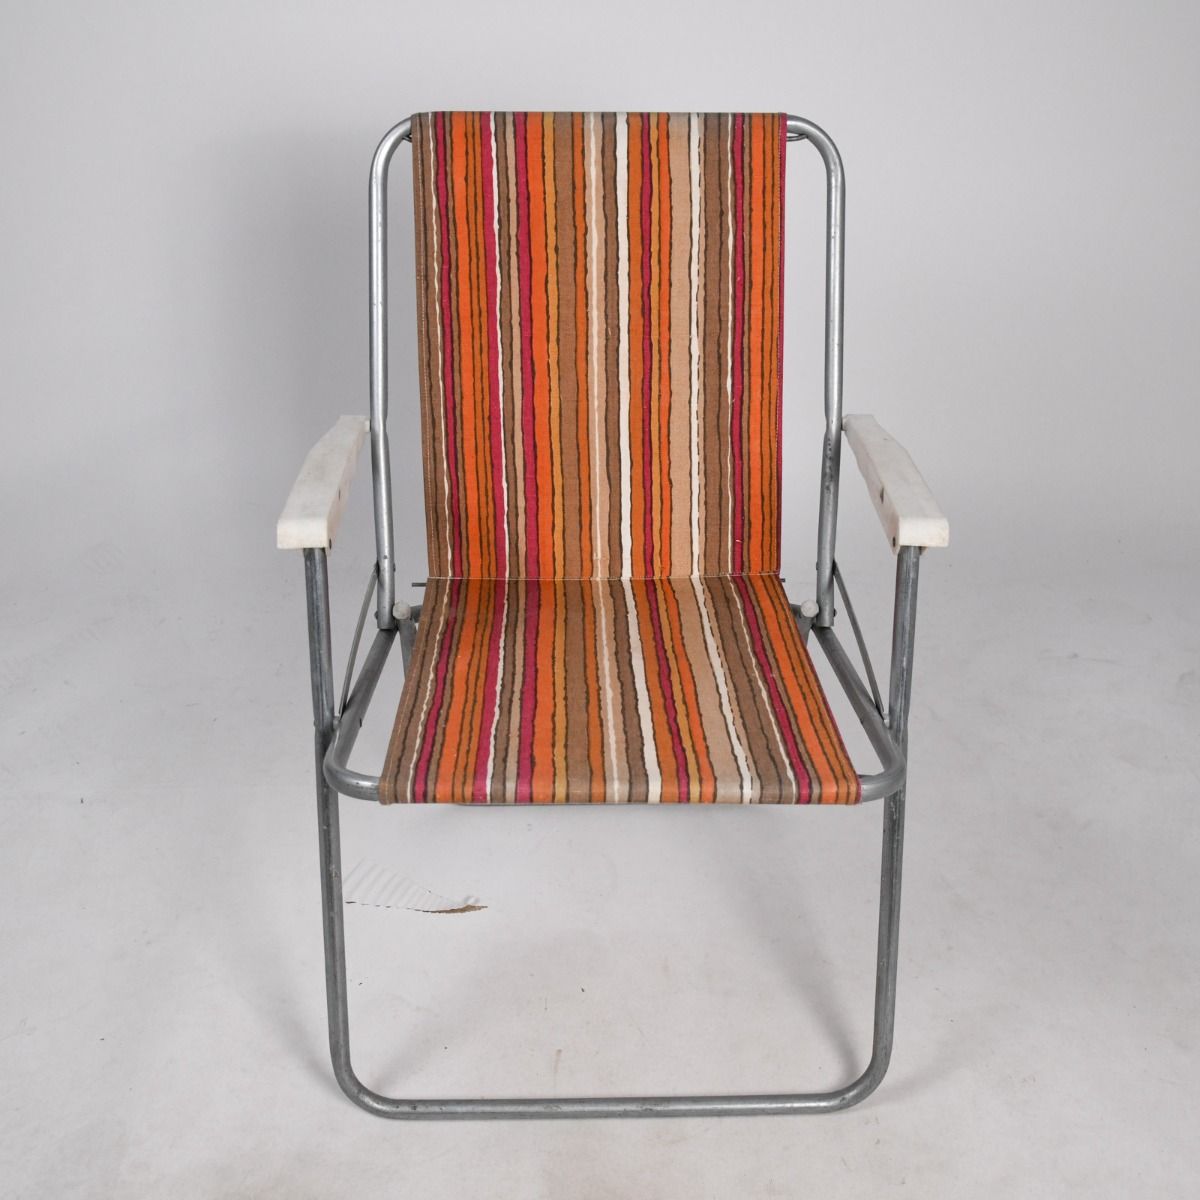 Vintage 1970s Striped Deck Chair